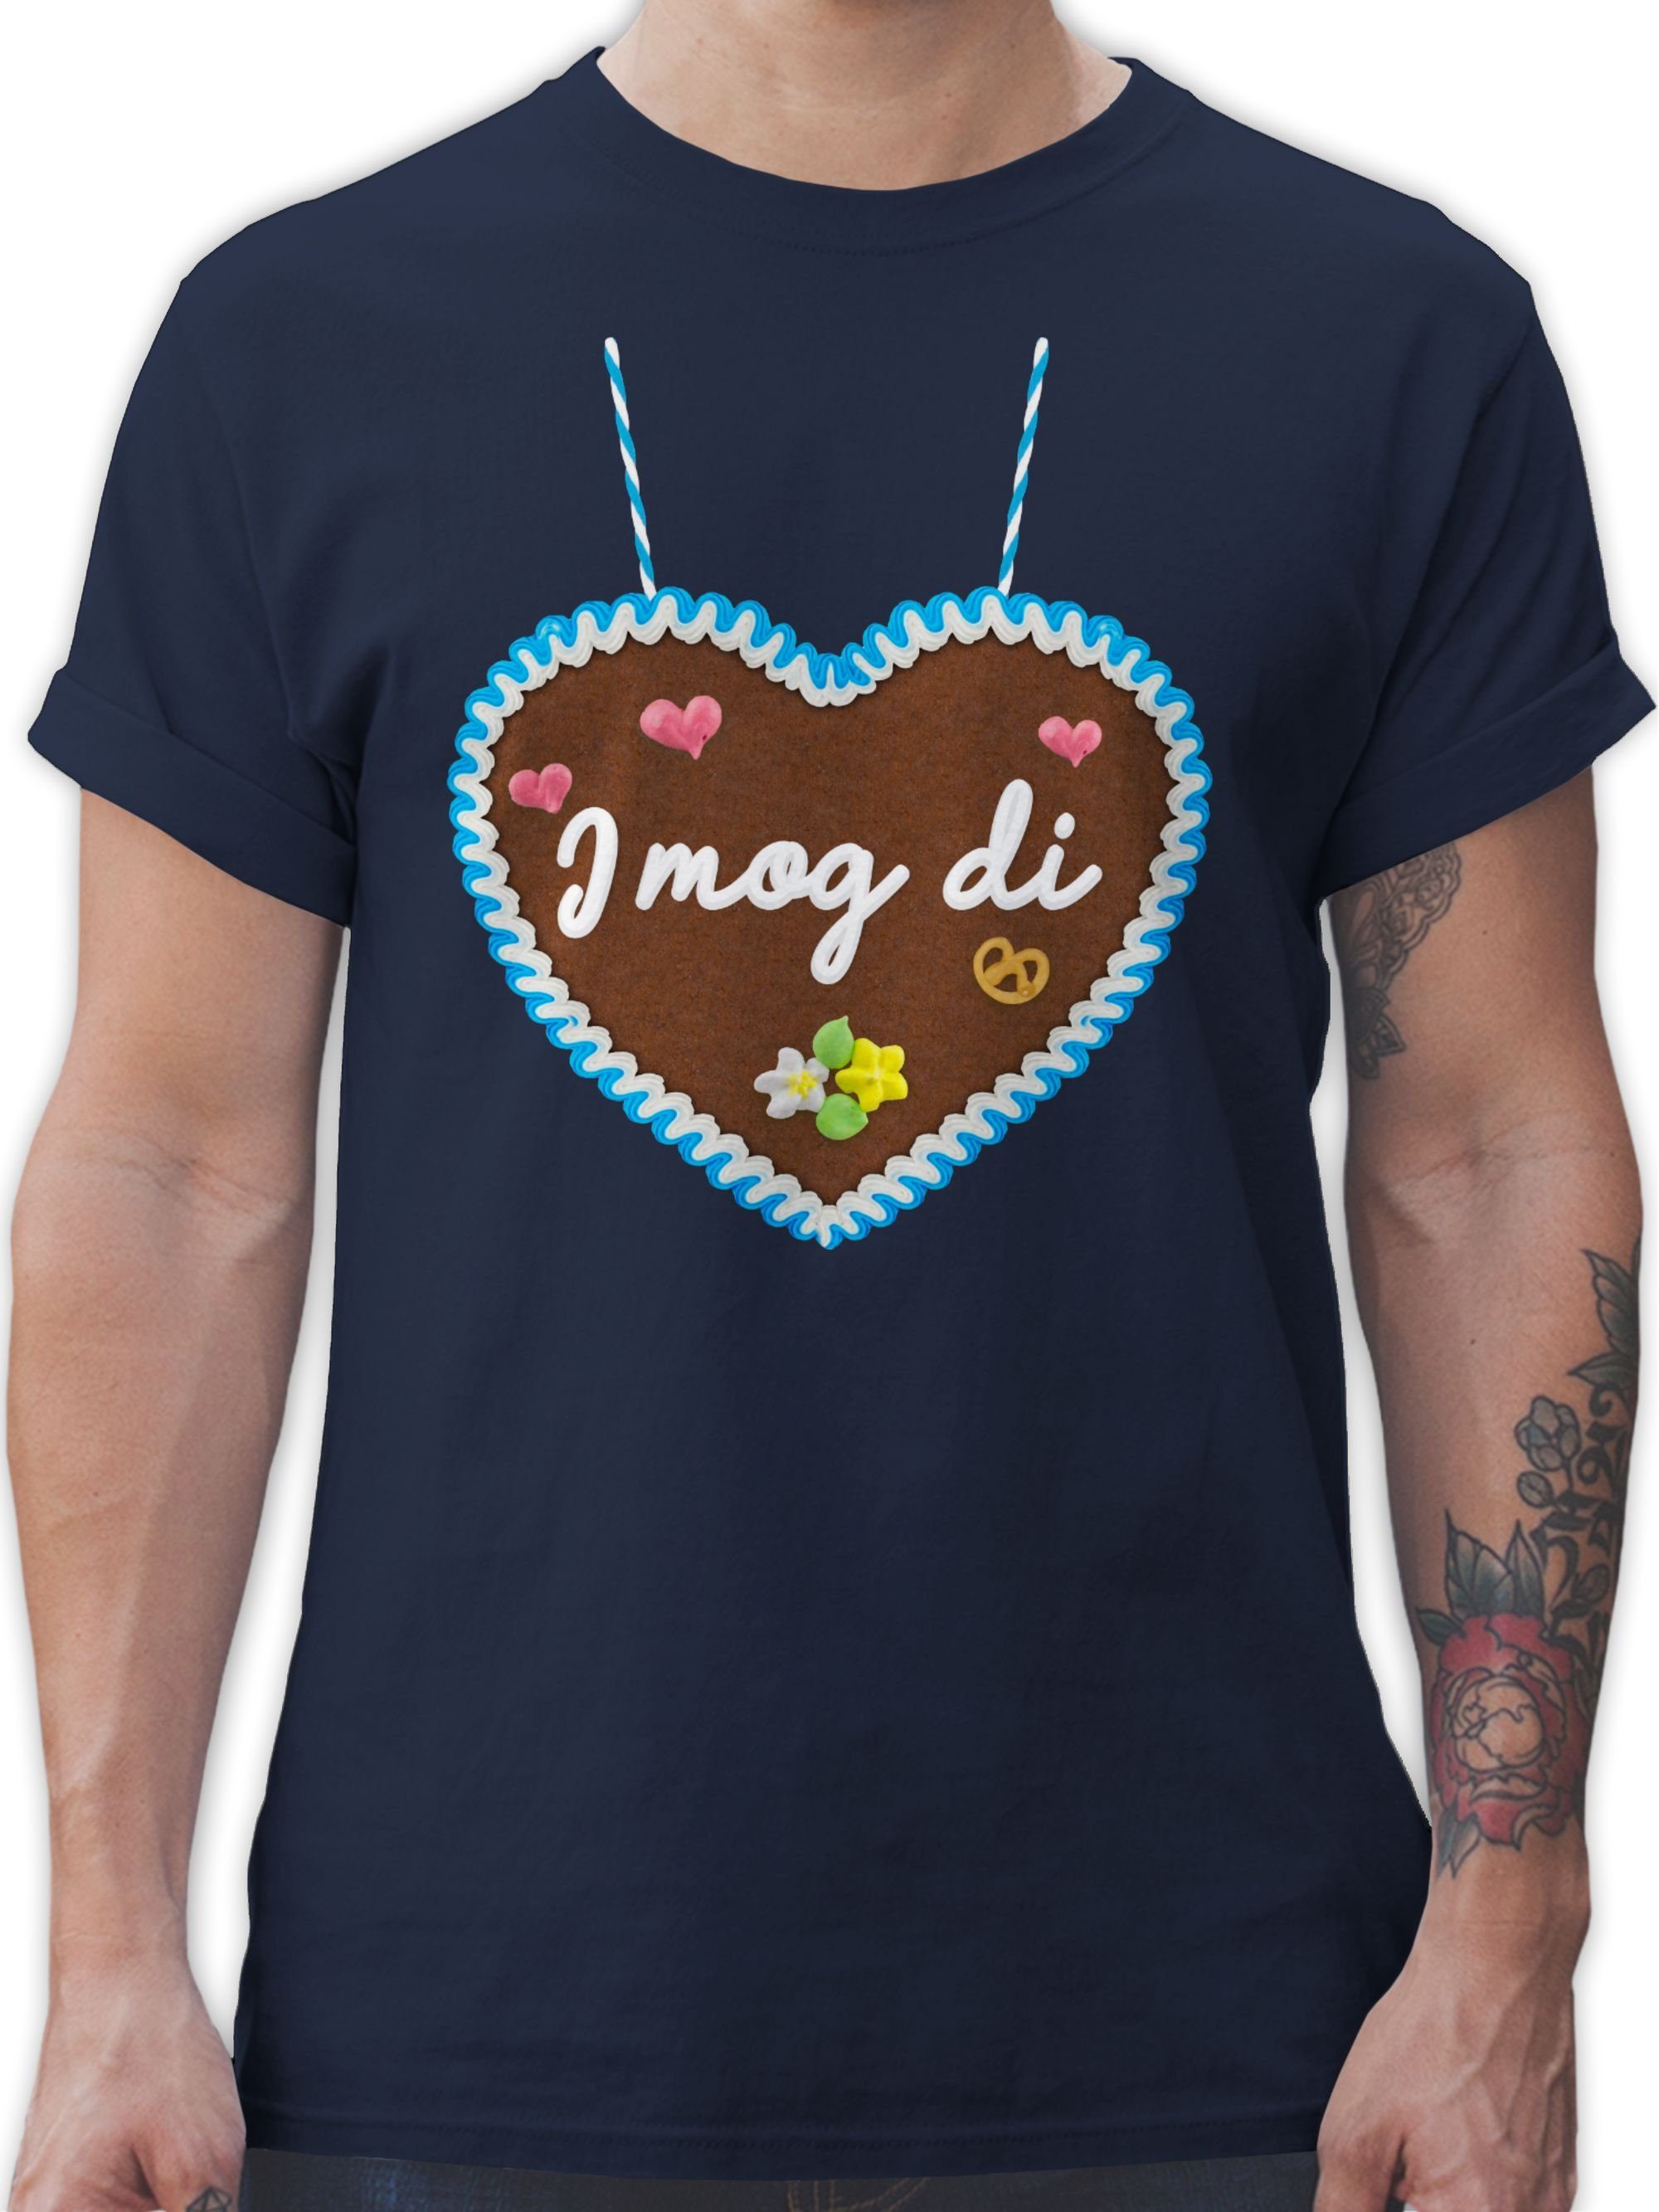 Shirtracer T-Shirt I mog di - Lebkuchenherz - Gänseblümchen Butterblume Herzen Mode für Oktoberfest Herren 02 Navy Blau